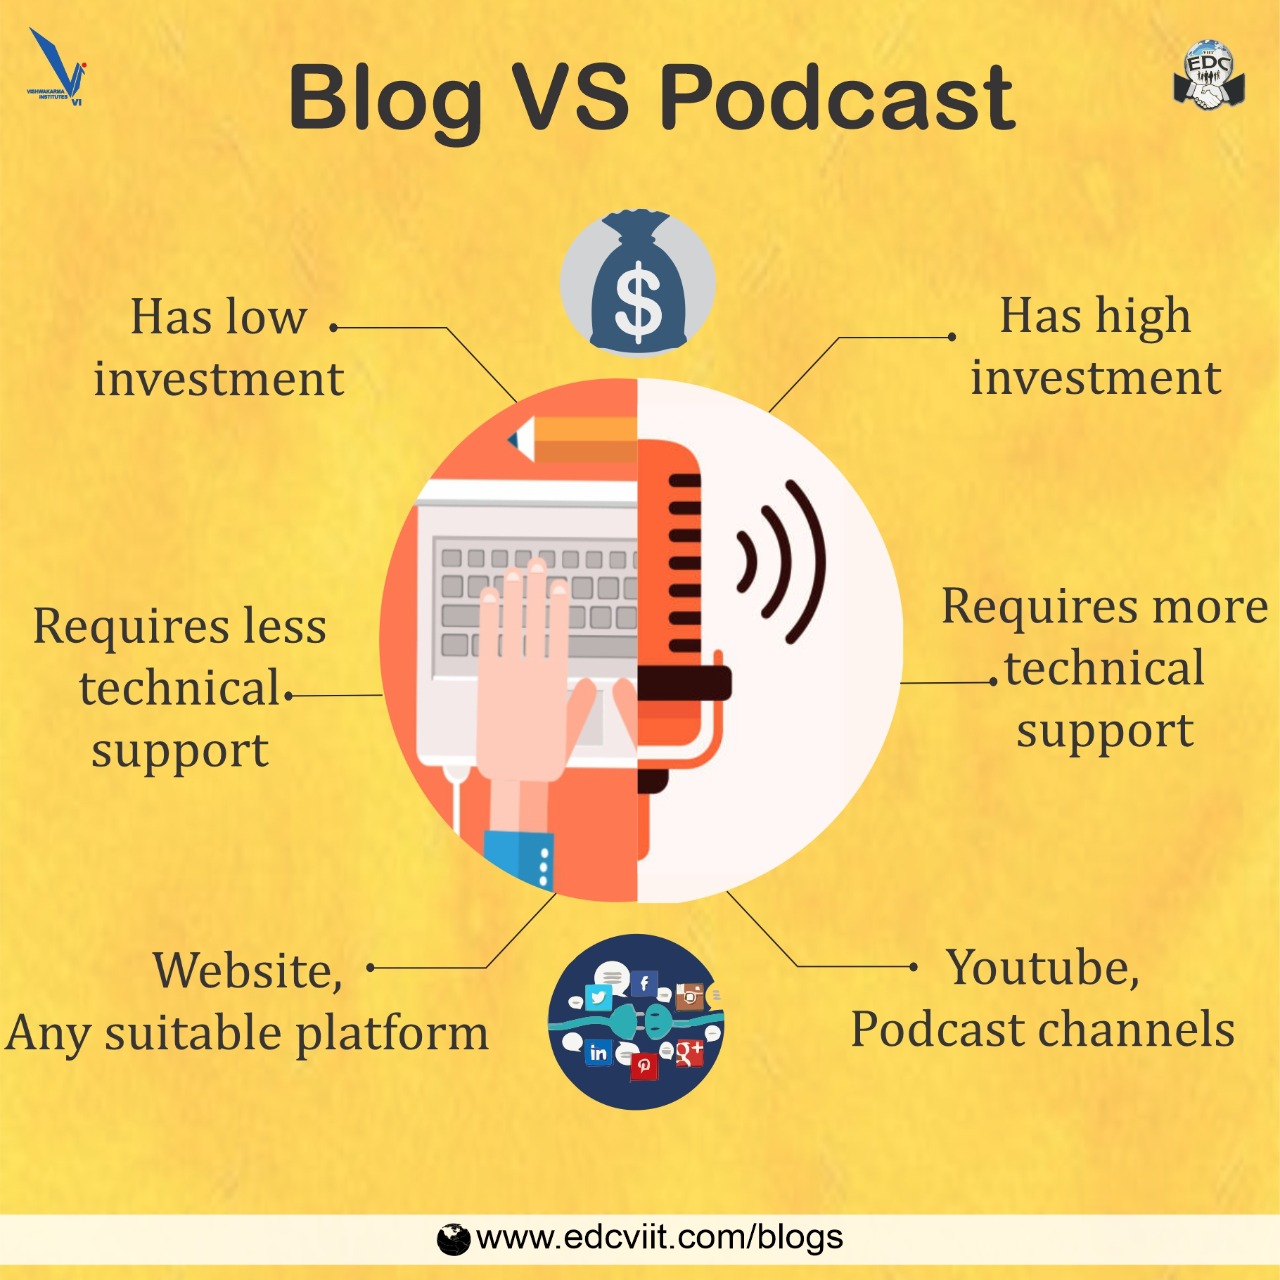 Blogs Vs Podcast